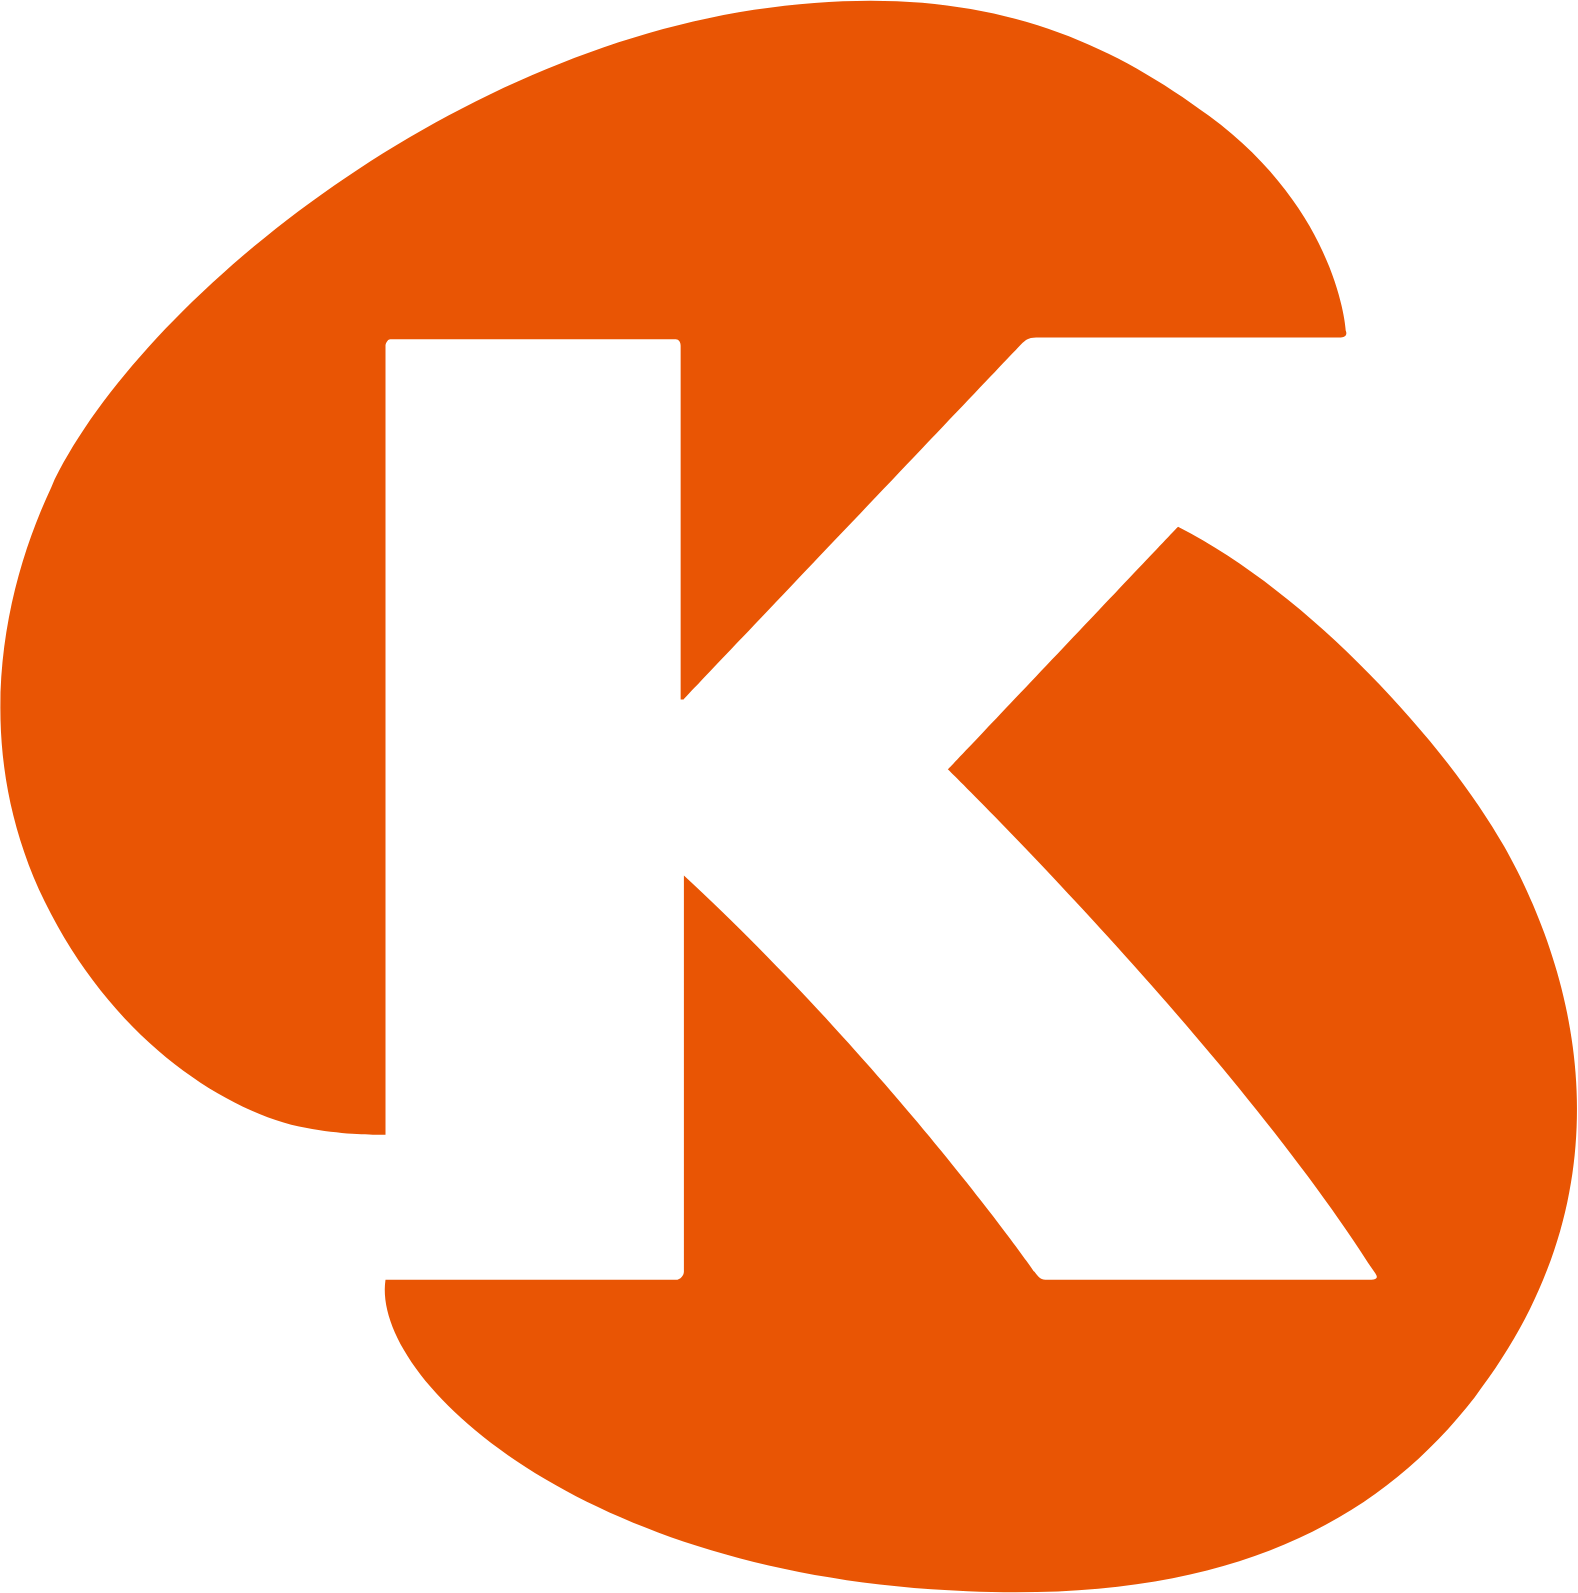 kyowa Kirin logo (transparent PNG)